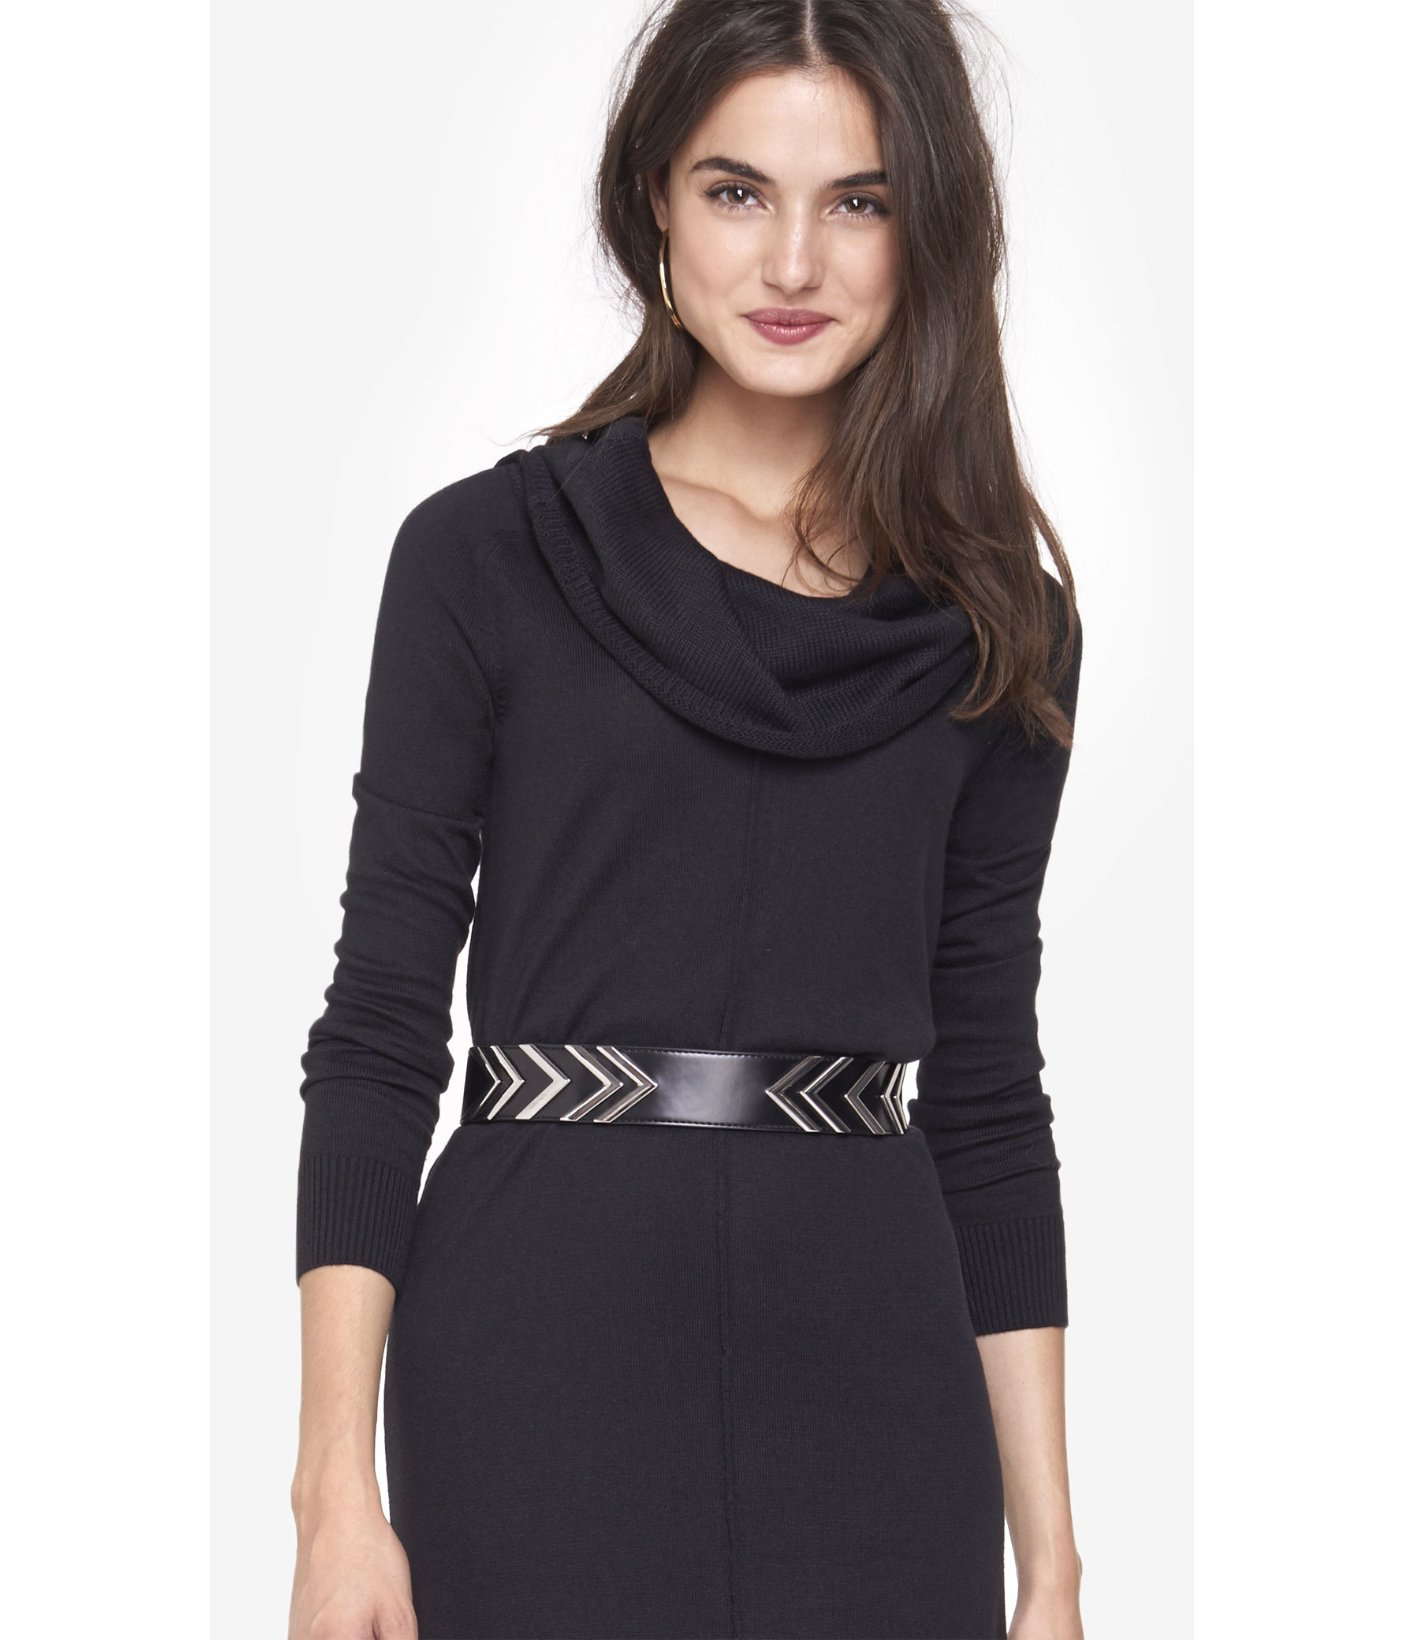 Lyst - Express Black Cowl Neck Sweater Dress in Black